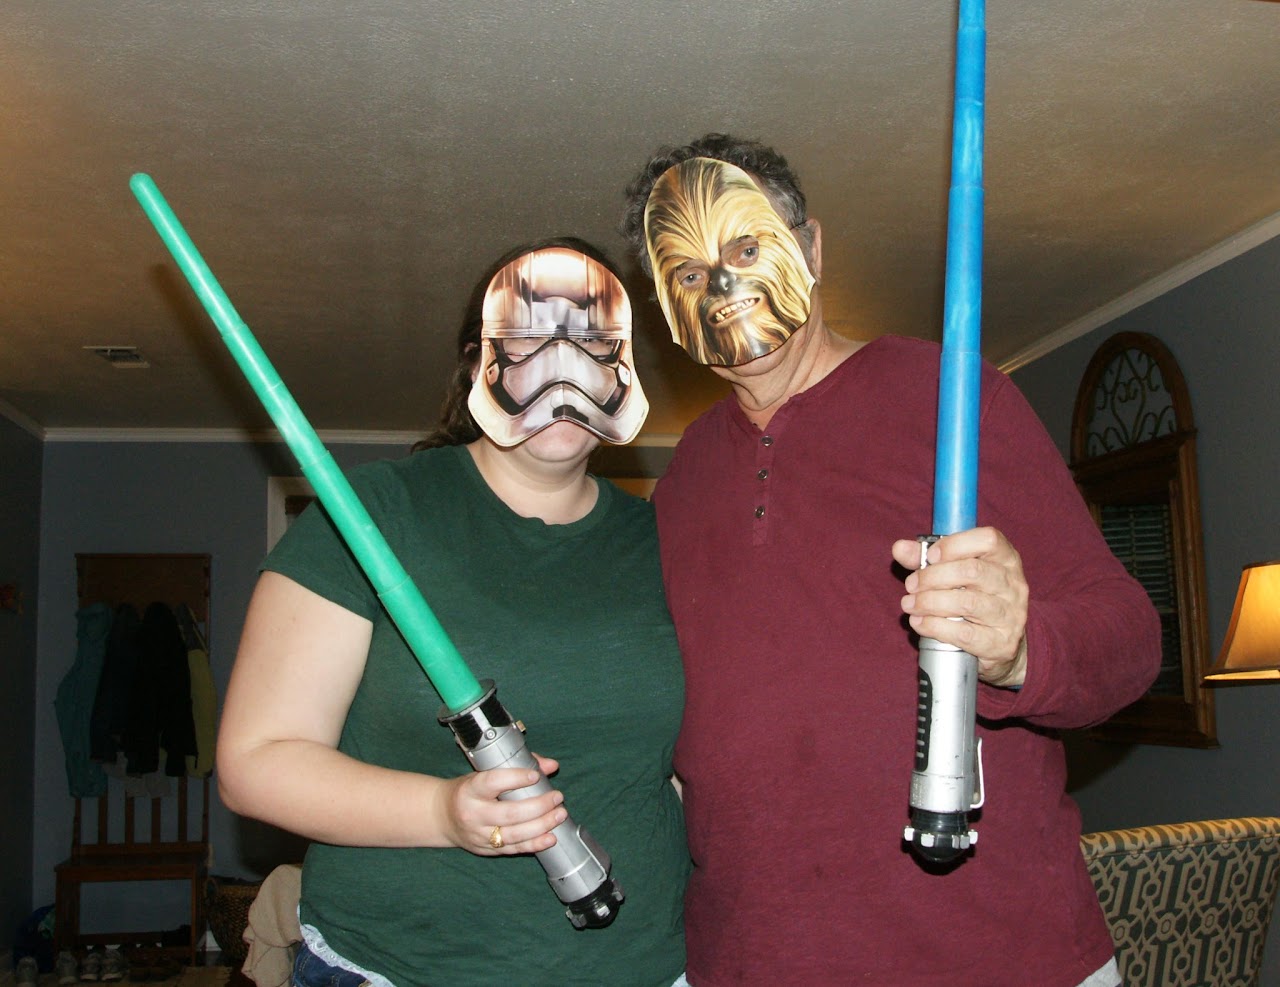 Karen Jr. and Alex with lightsabers and star wars masks